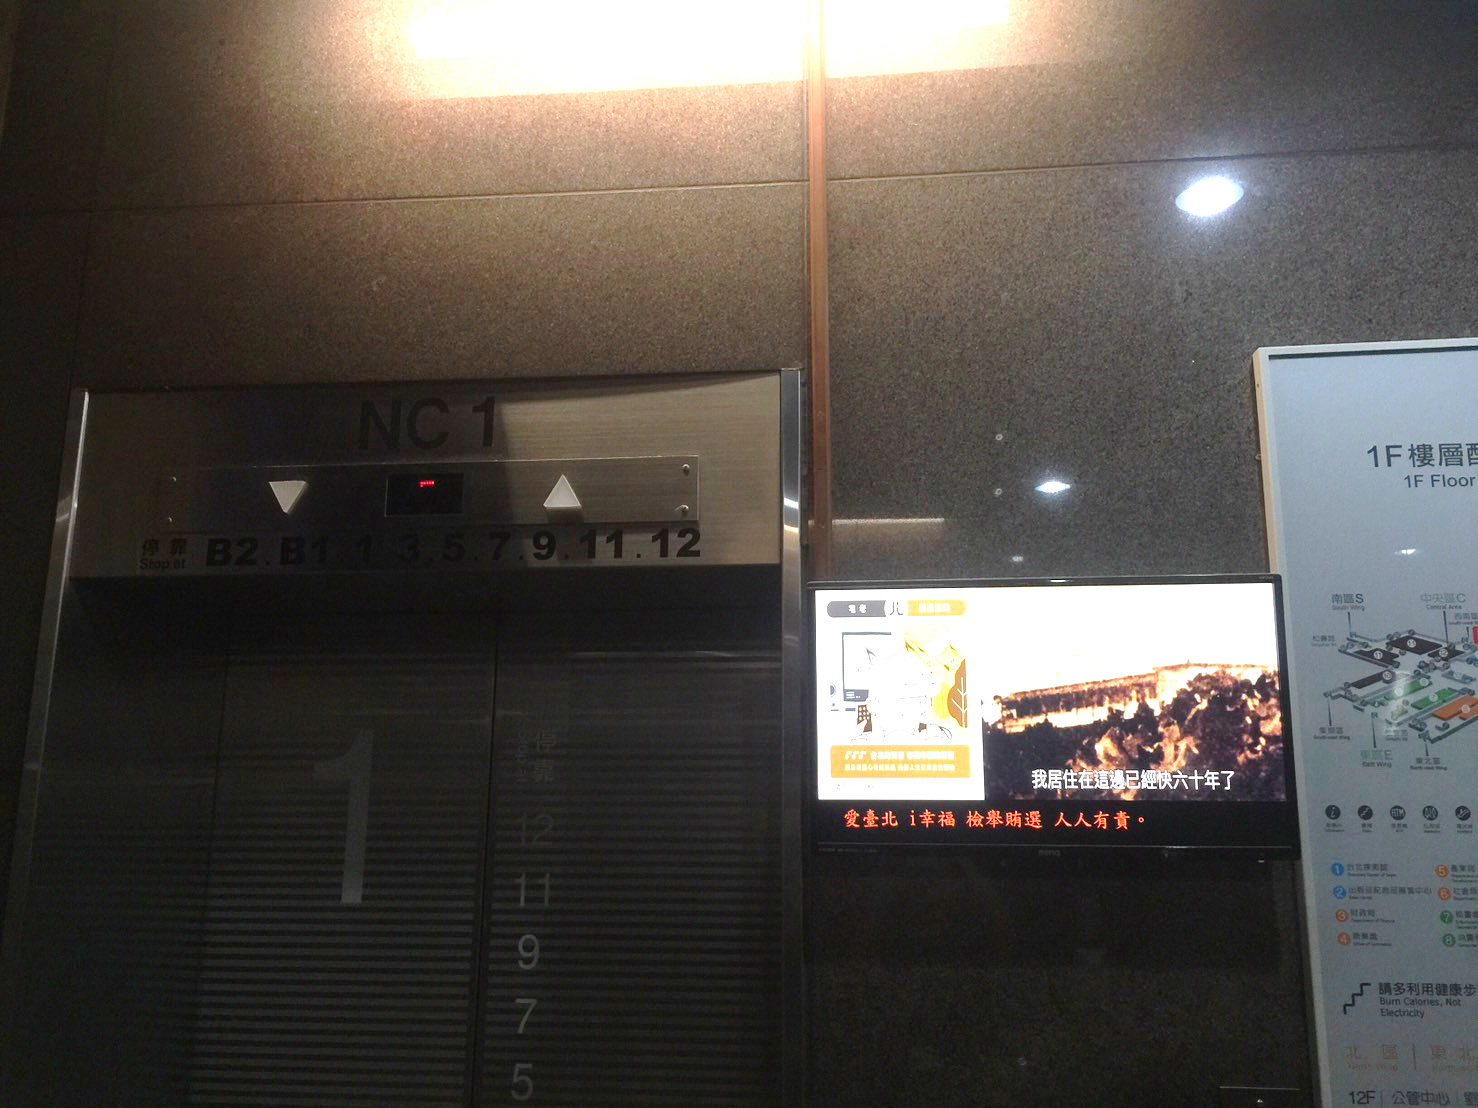 1F電梯乘場畫面	